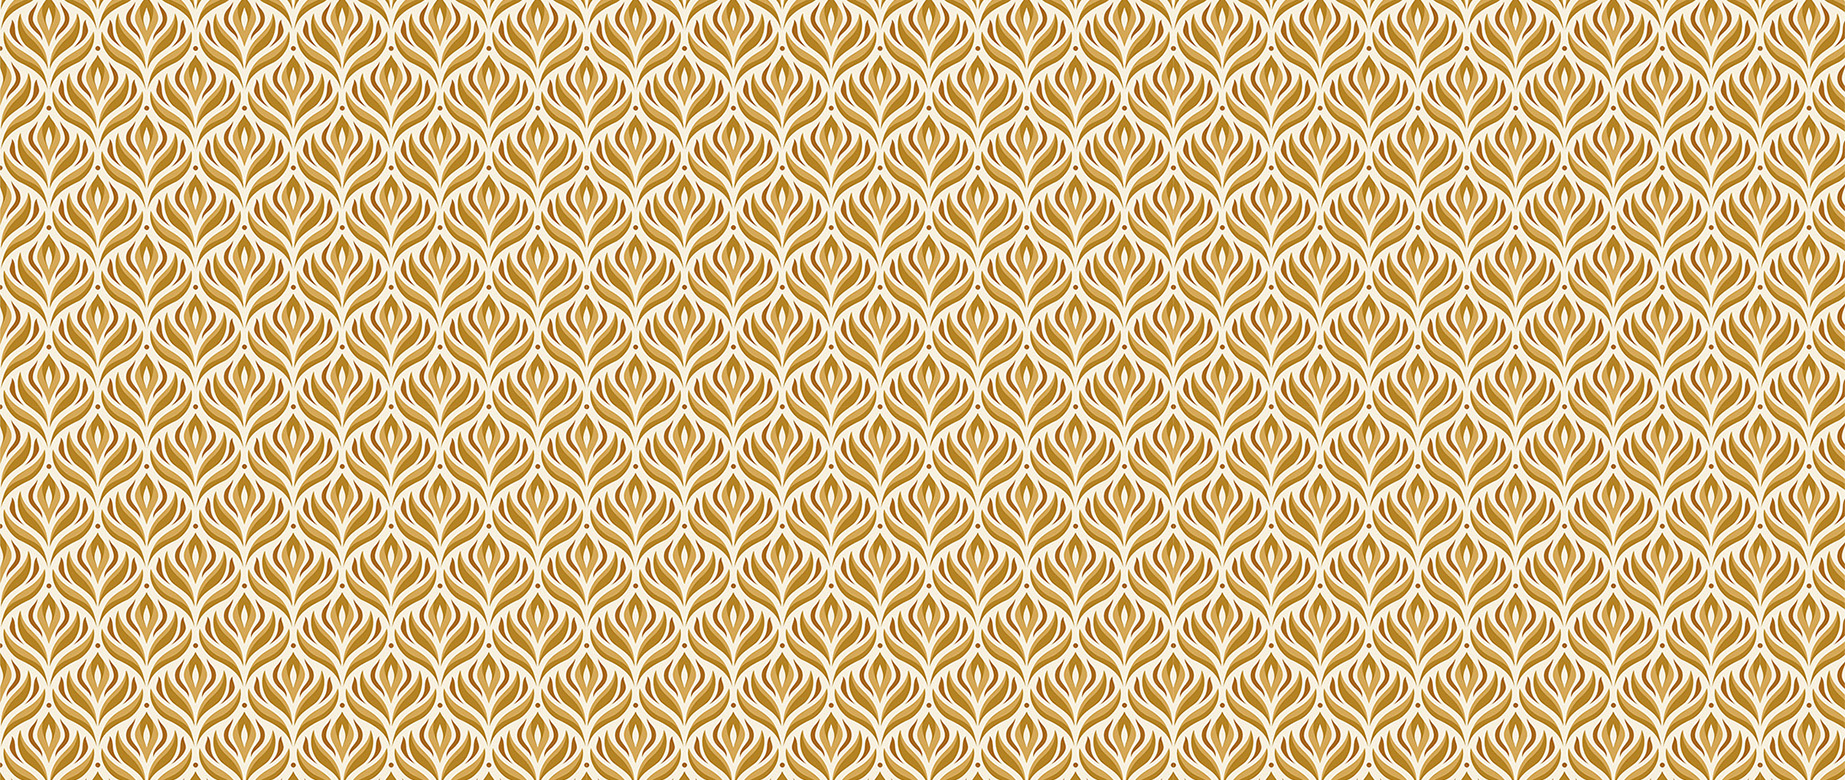 golden-leaves-design-Seamless design repeat pattern wallpaper-in-wide-room